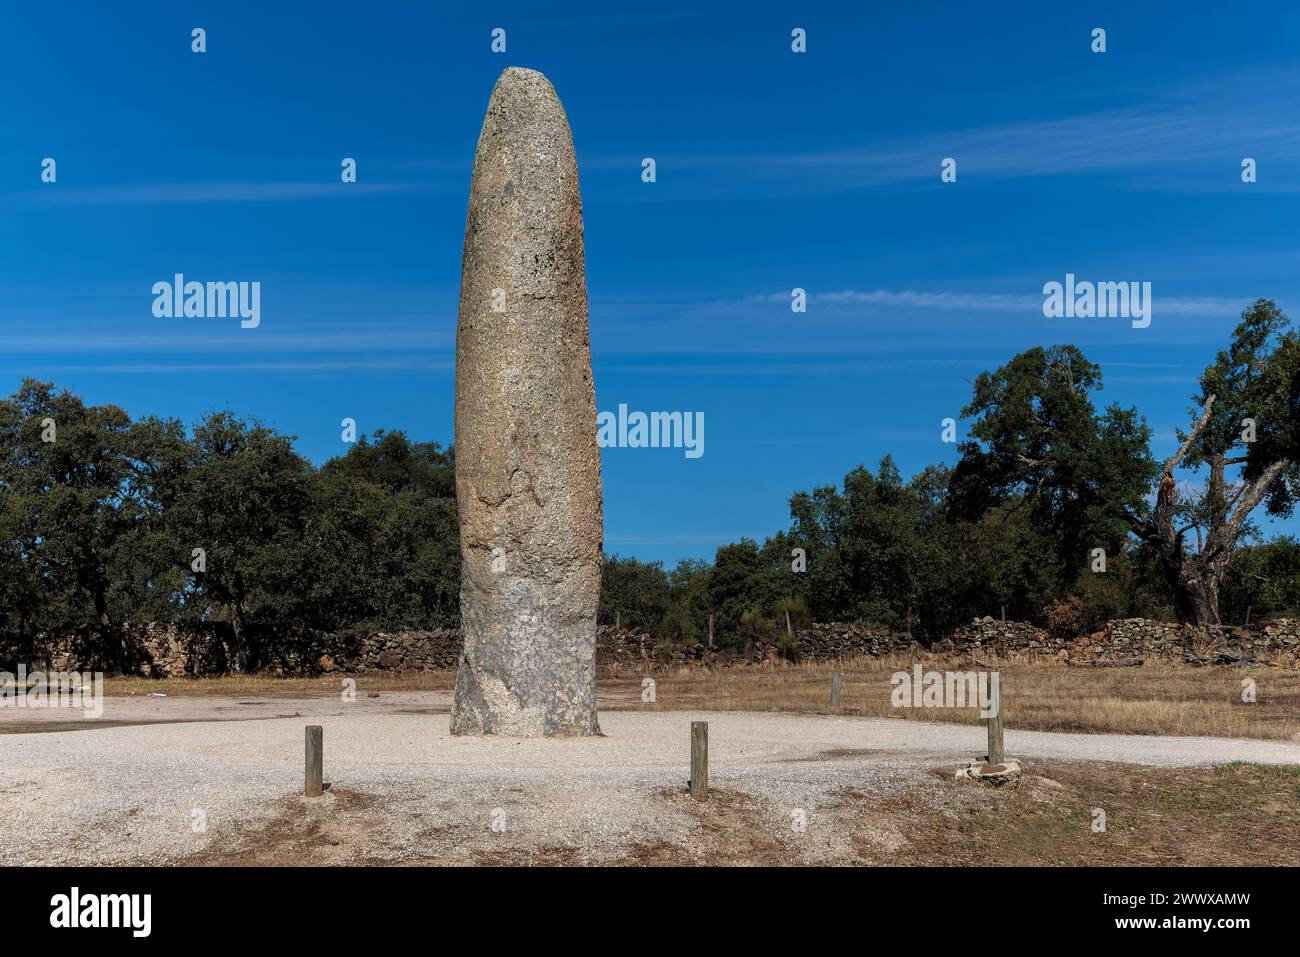 The Menhir of Meada standing stone near Castelo de Vide in Portugal Stock Photo